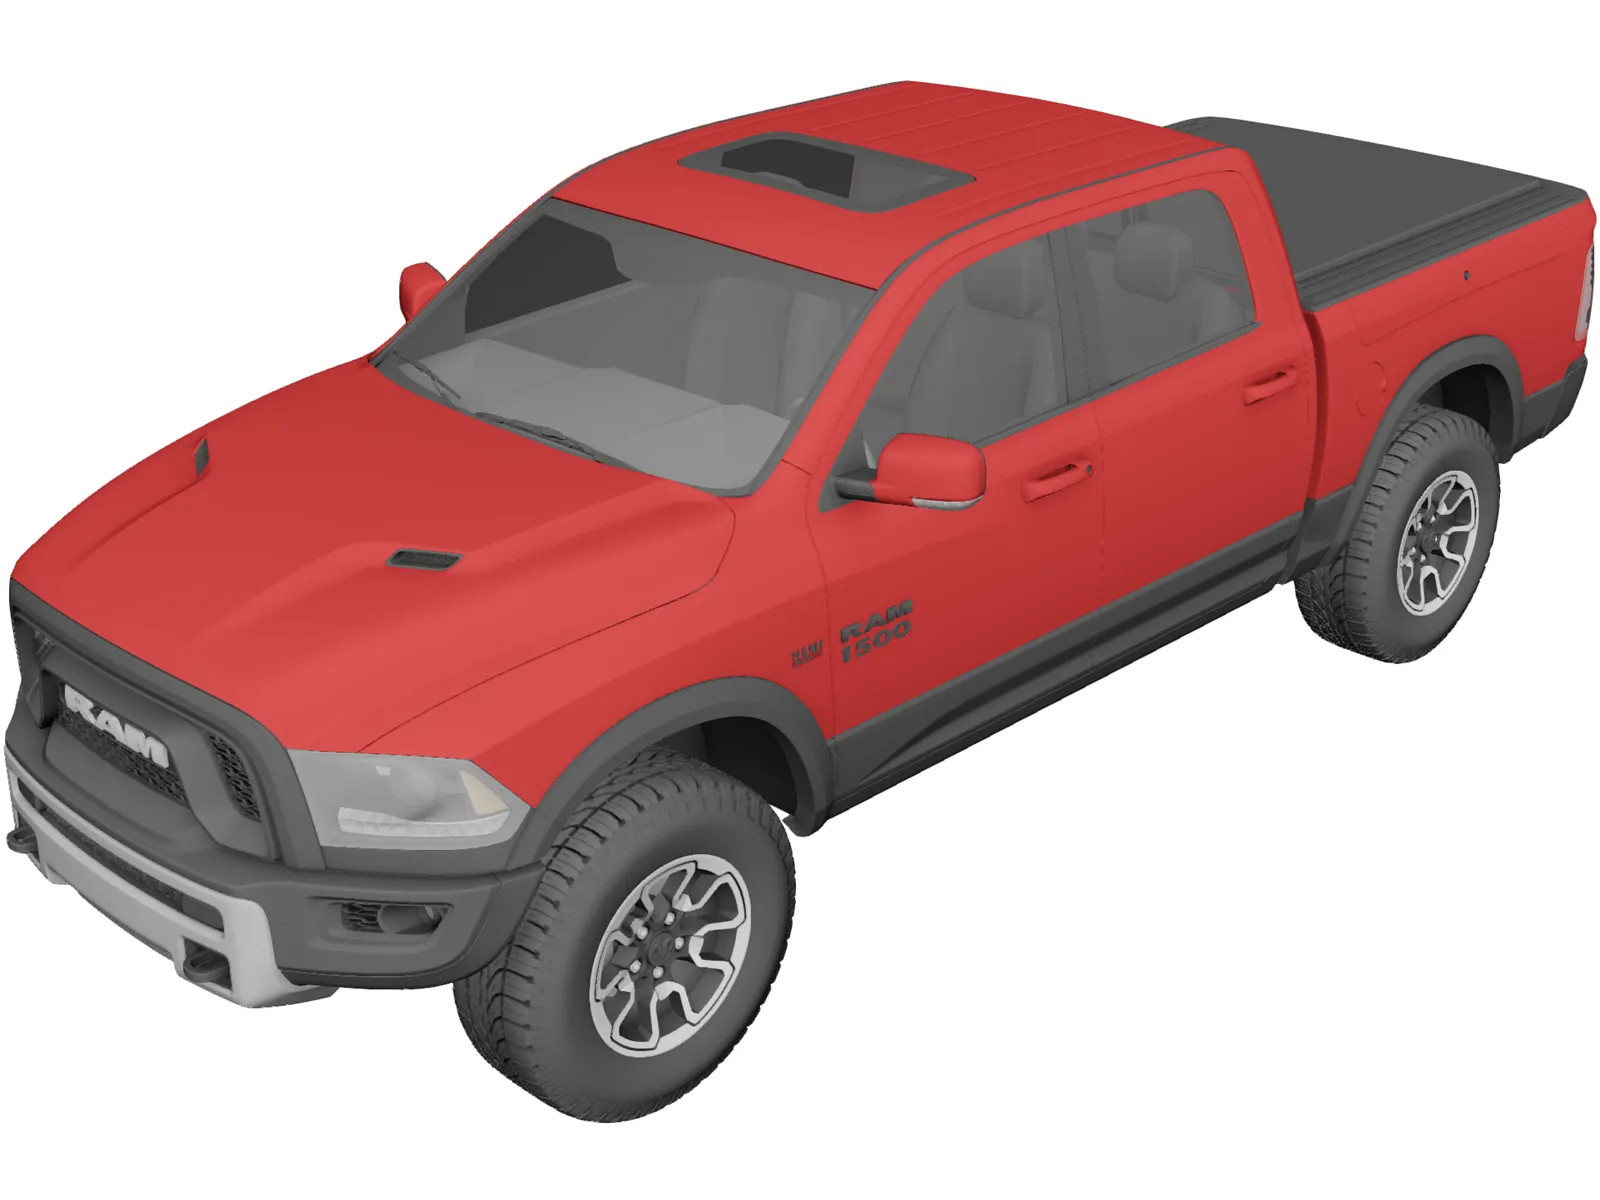 Dodge Ram 1500 Rebel (2015) 3D Model